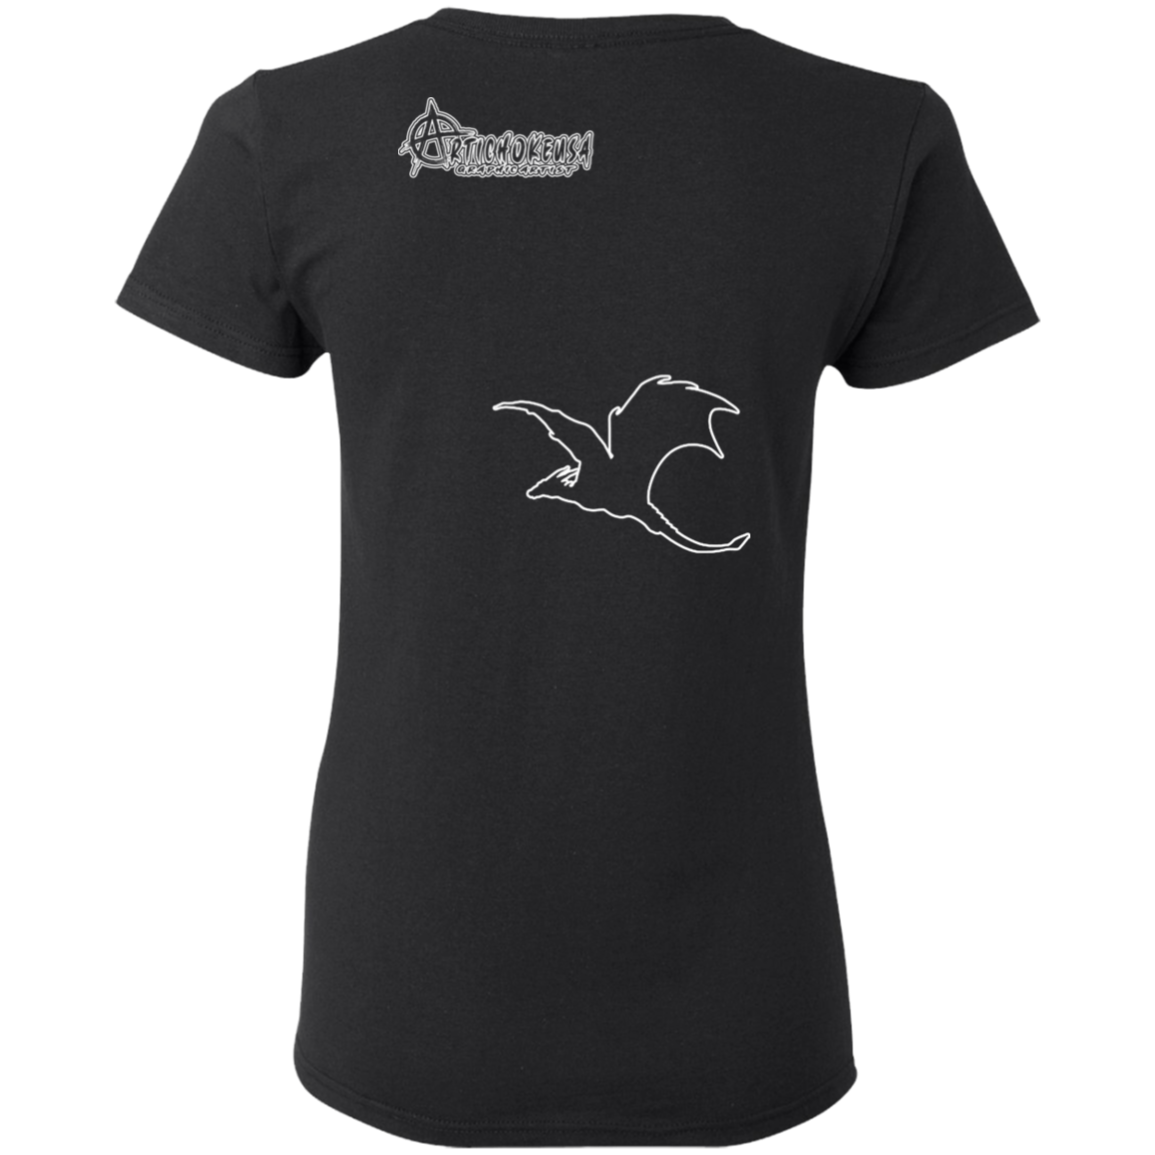 ArtichokeUSA Custom Design #16. Dracarys That Shit Up. Game of Thrones Fan Art. Ladies' Basic 100% Cotton T-Shirt